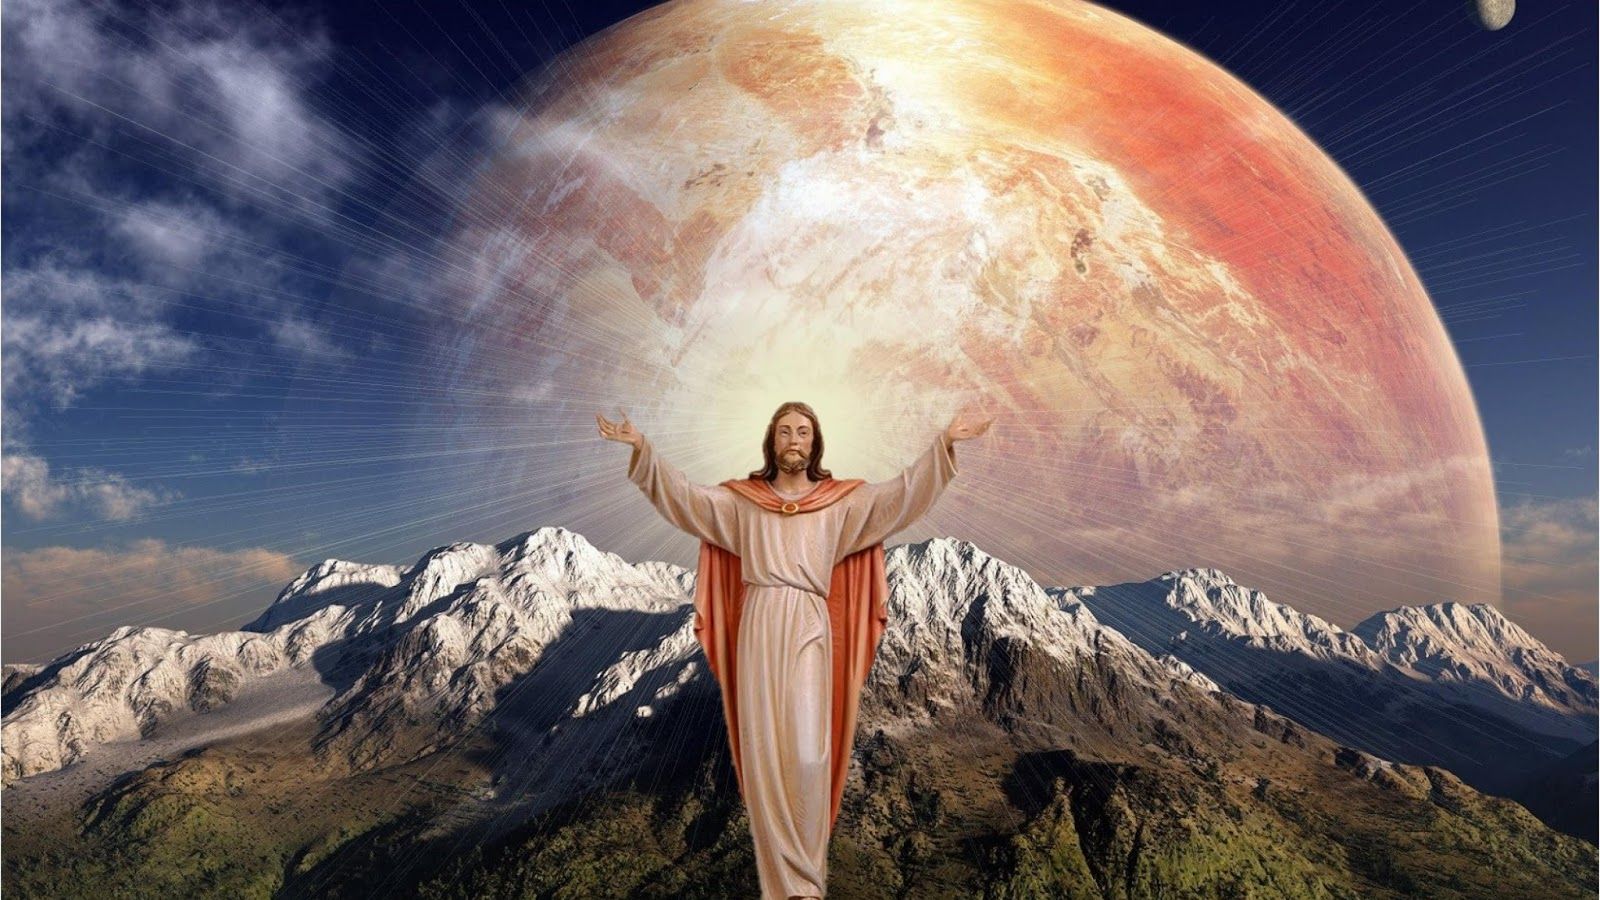 Jesus Images Pictures of Jesus Christ Photos Wallpaper Download